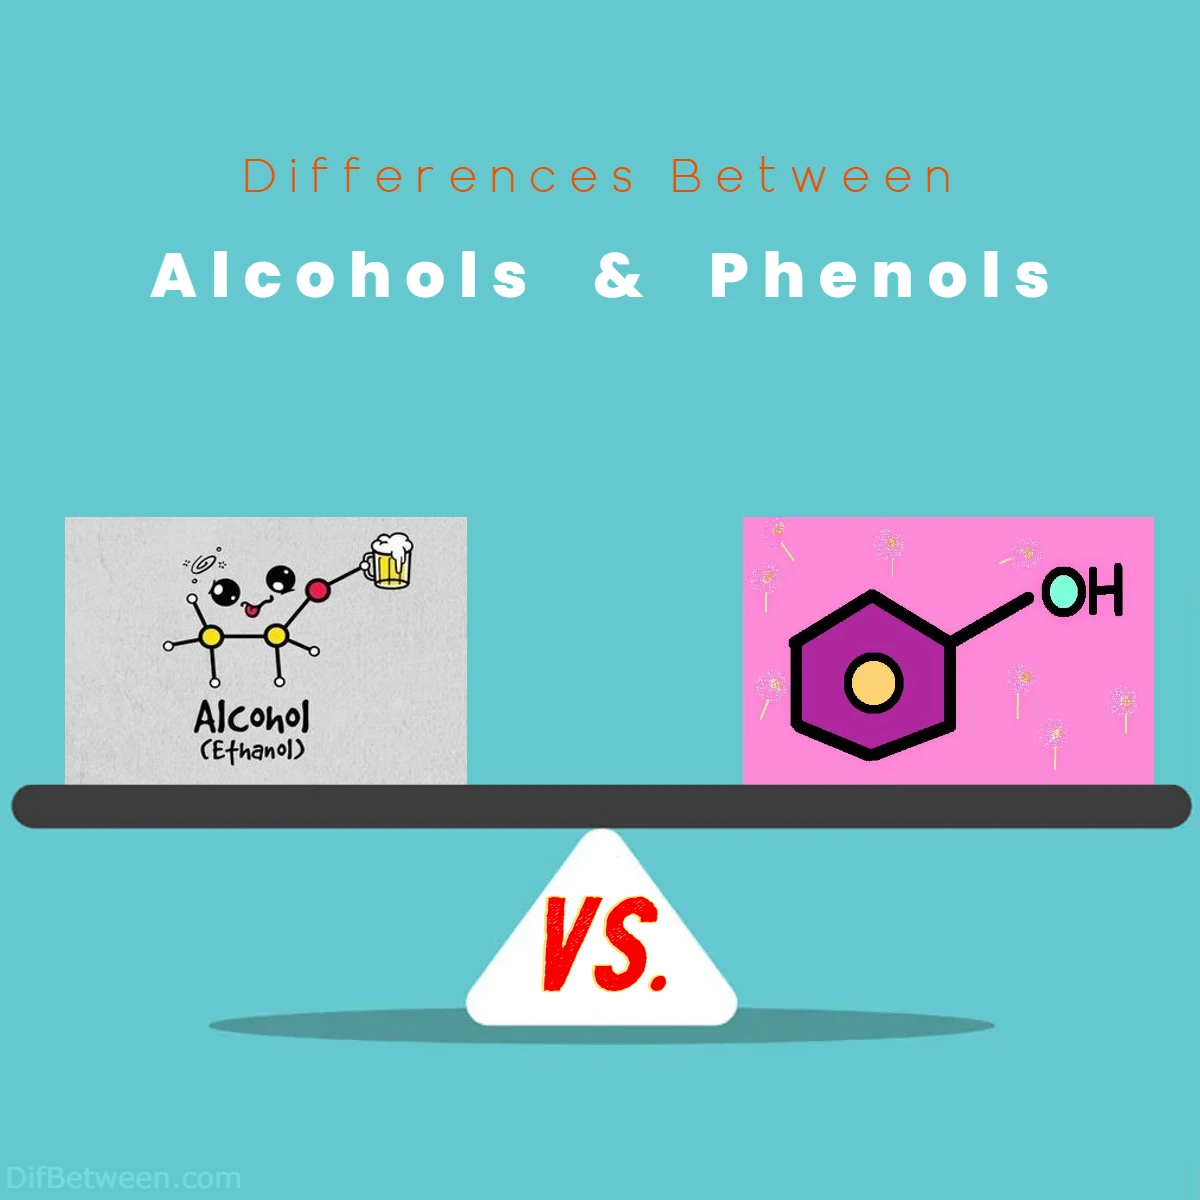 Differences Between Alcohols vs Phenols